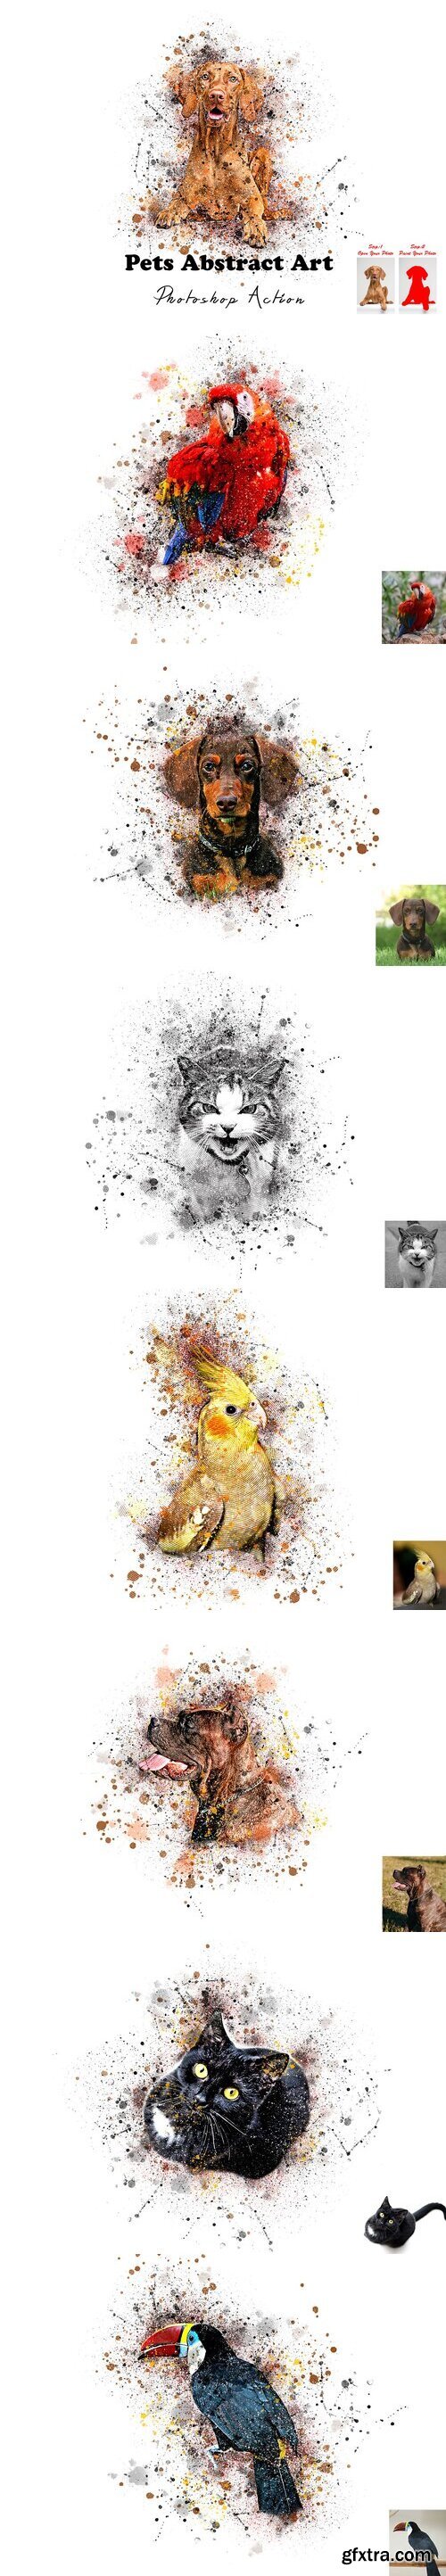 CreativeMarket - Pets Abstract Art Photoshop Action 7541562